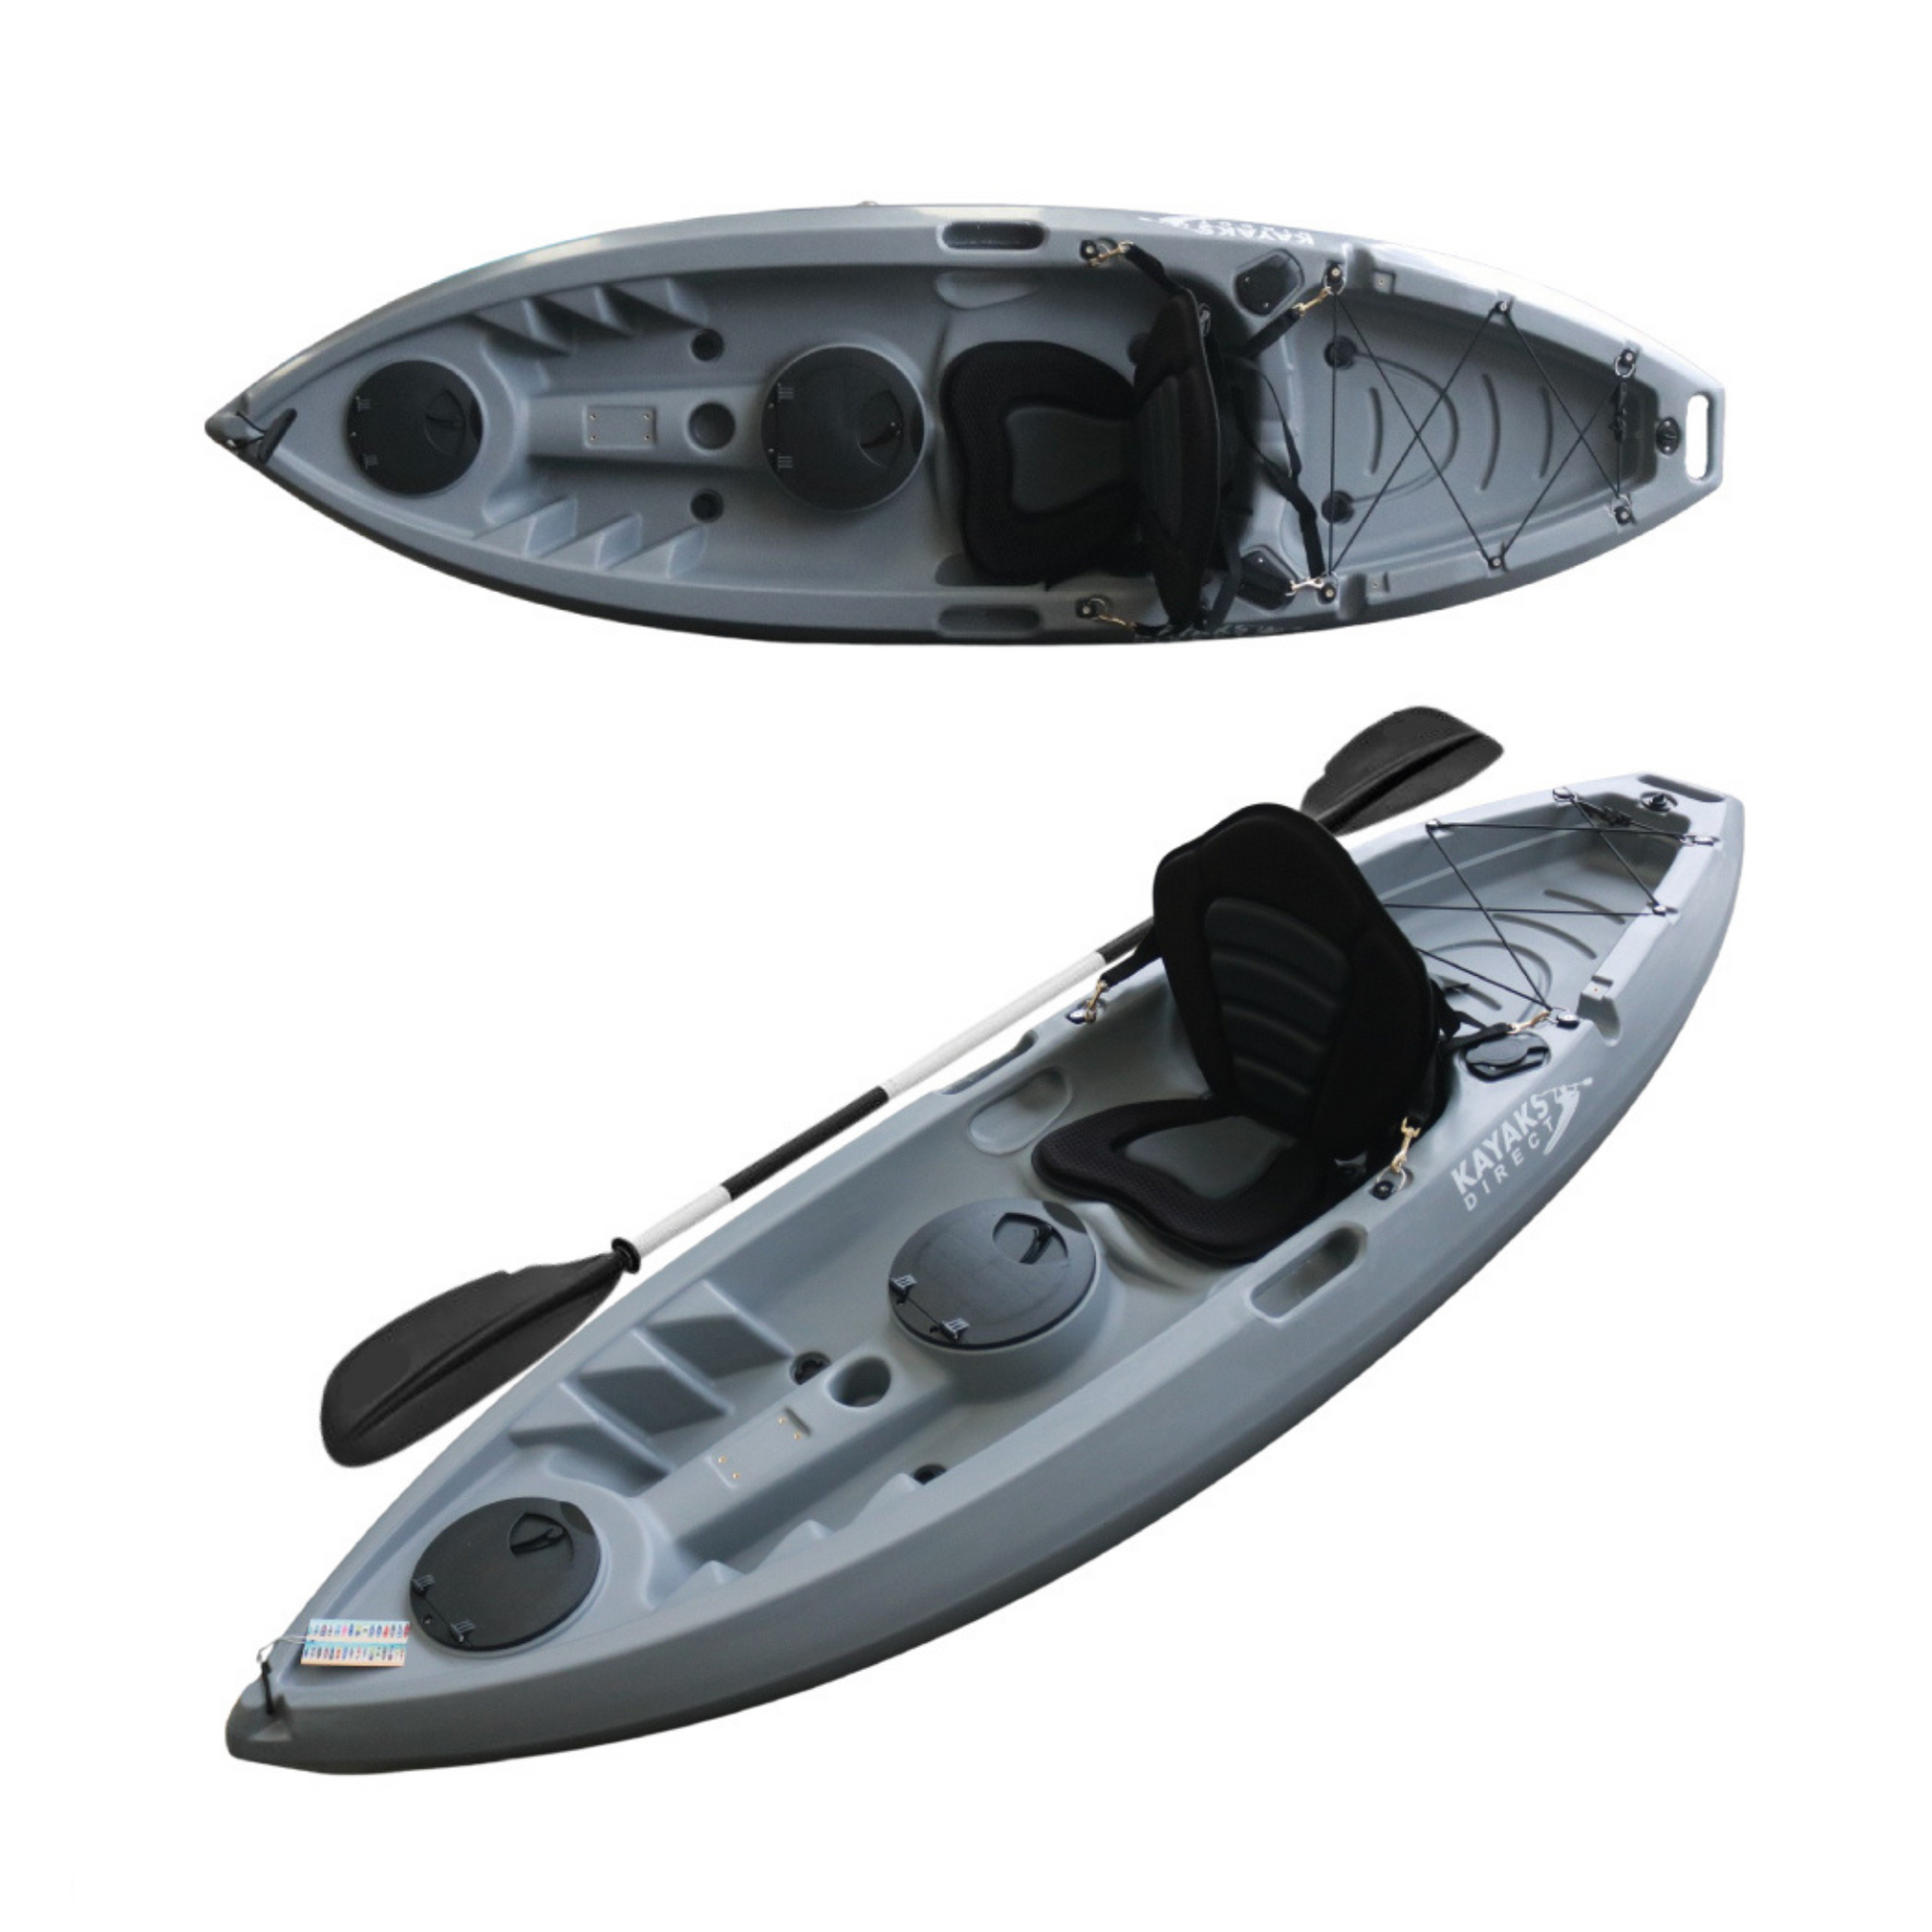 Graphite Grey Kayak, Sit-on-Top Shorty by Kayaks Direct